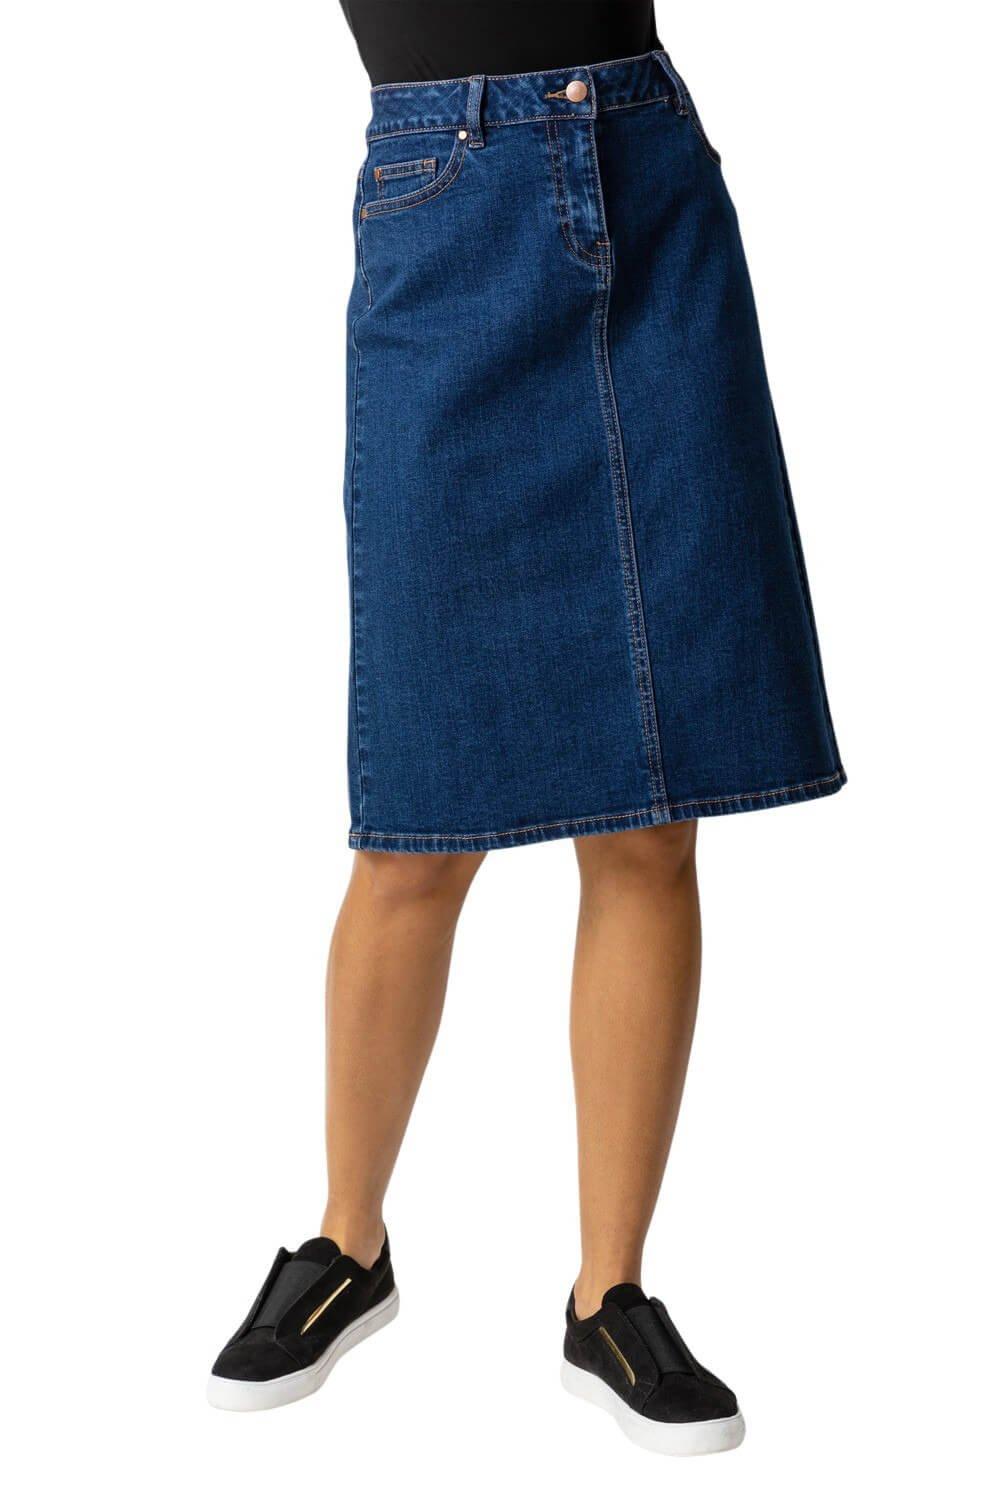 Юбка из хлопковой джинсовой ткани стрейч Roman, синий юбка миди из джинсовой ткани l синий